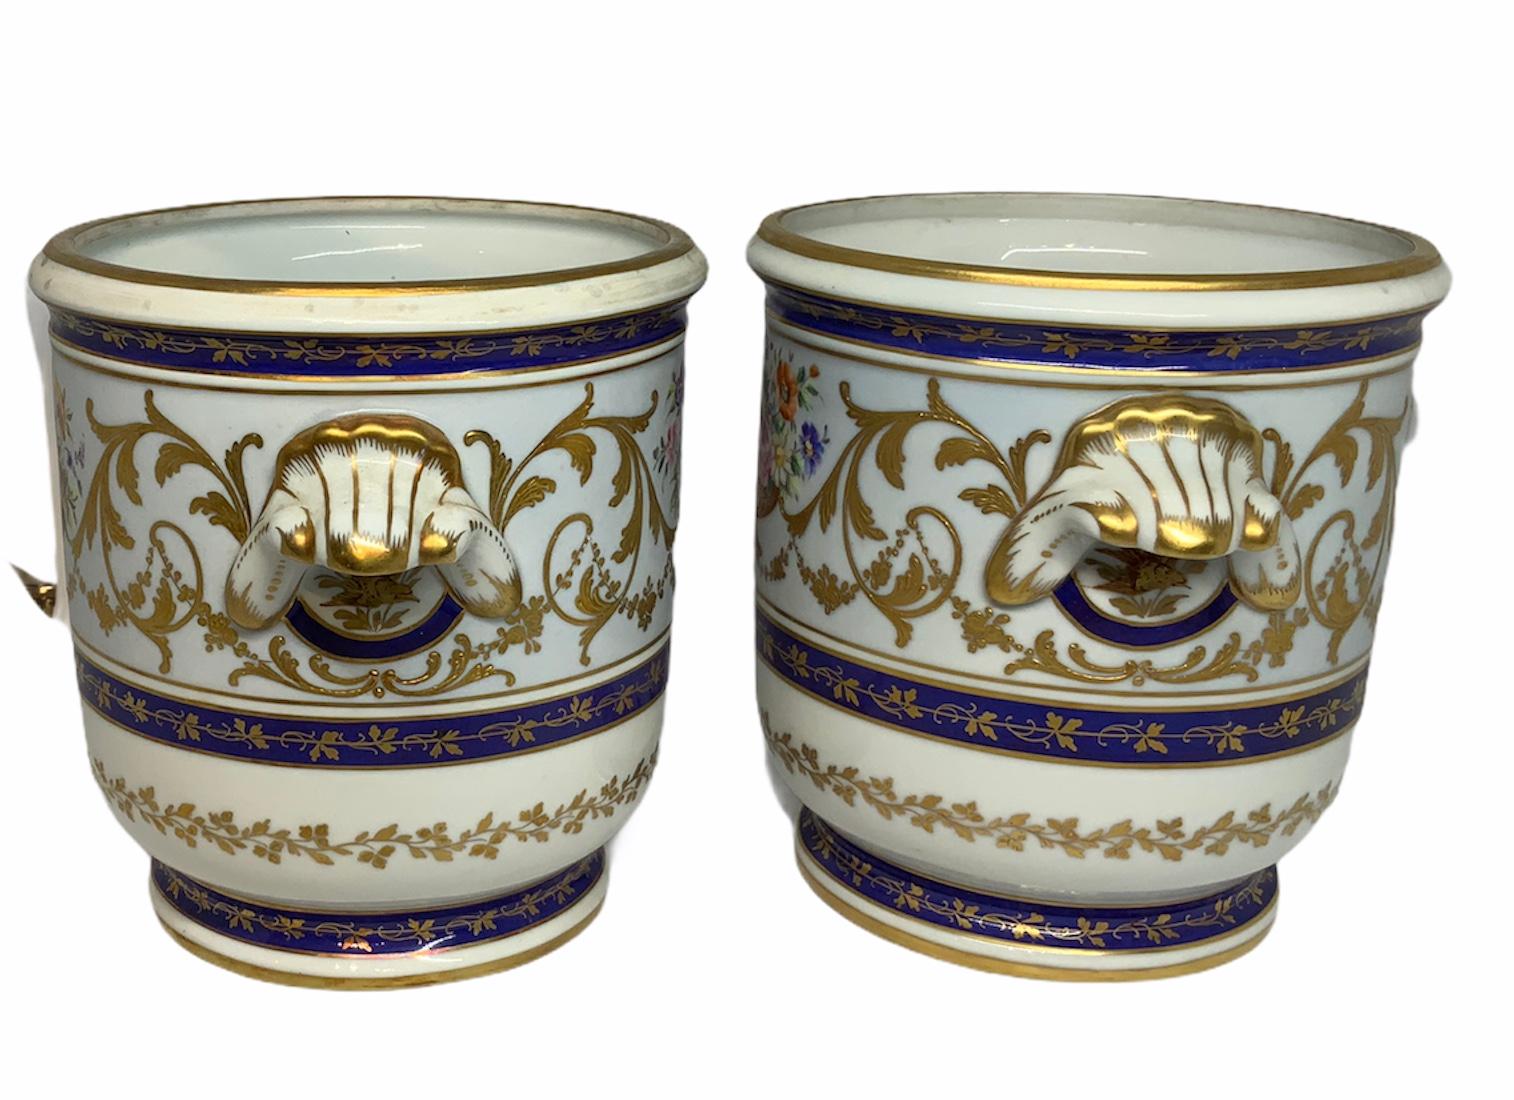 Camille Le Tallec Porcelain Pair of Cachepot For Sale 6